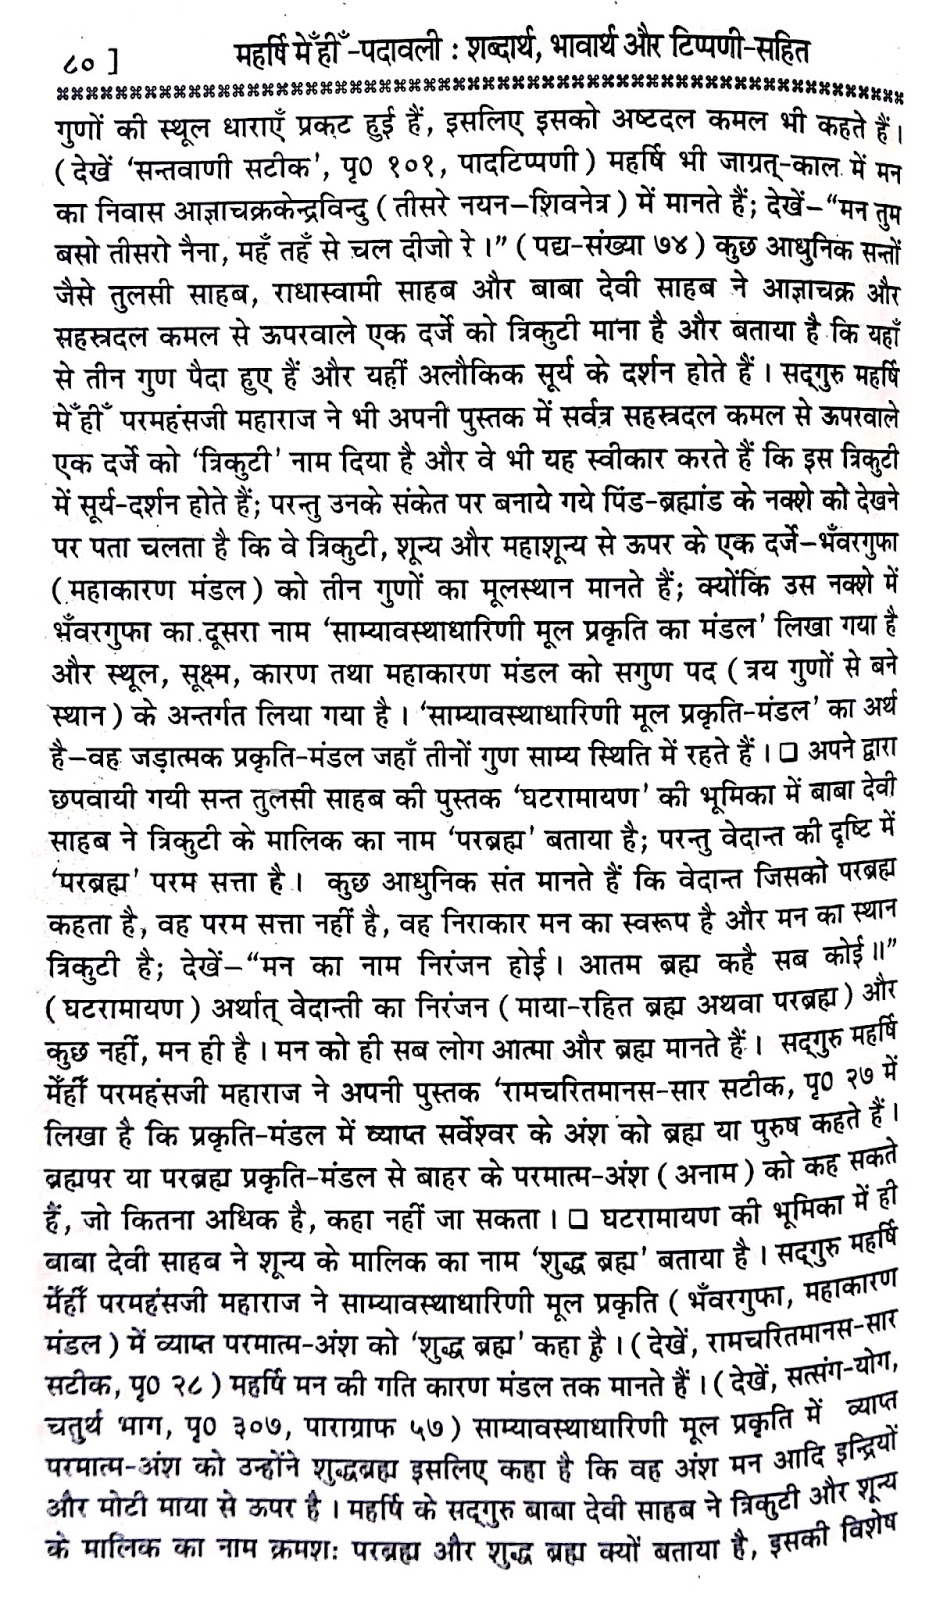 P24, Hindi Bhakti Bhajan Sadguru ki vinti, "दया प्रेम स्वरूप सद्गुरु,..." महर्षि मेंहीं पदावली अर्थ सहित। पदावली भजन 24, पर विशेष टिप्पणी।